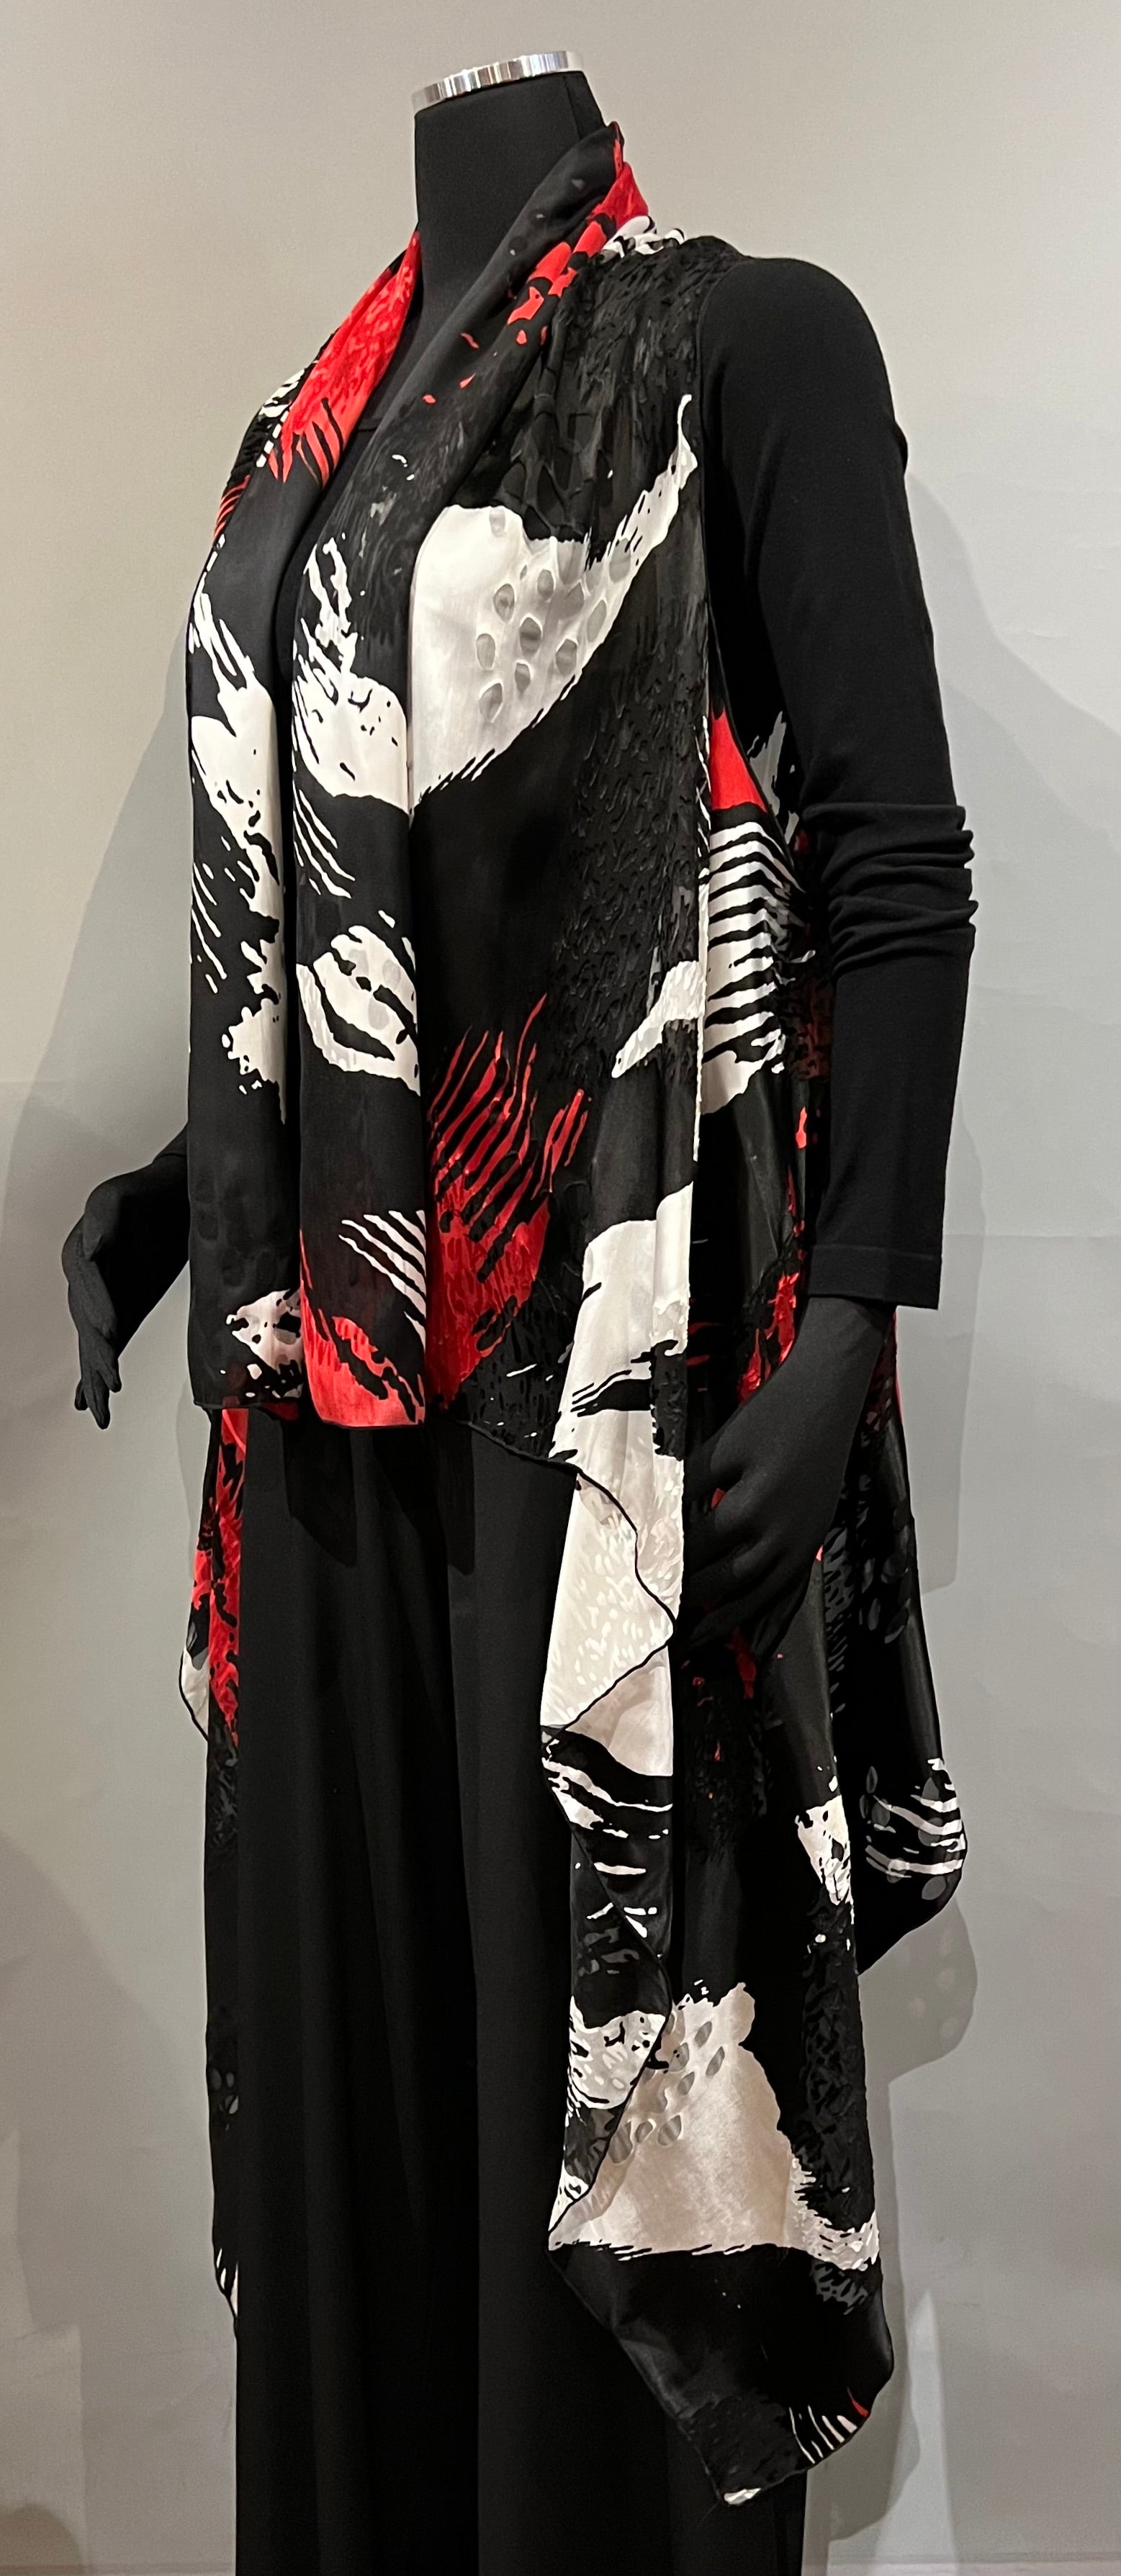 Kriska KBWR ELEGANCE One Size 4-Way Silk & Rayon Vest